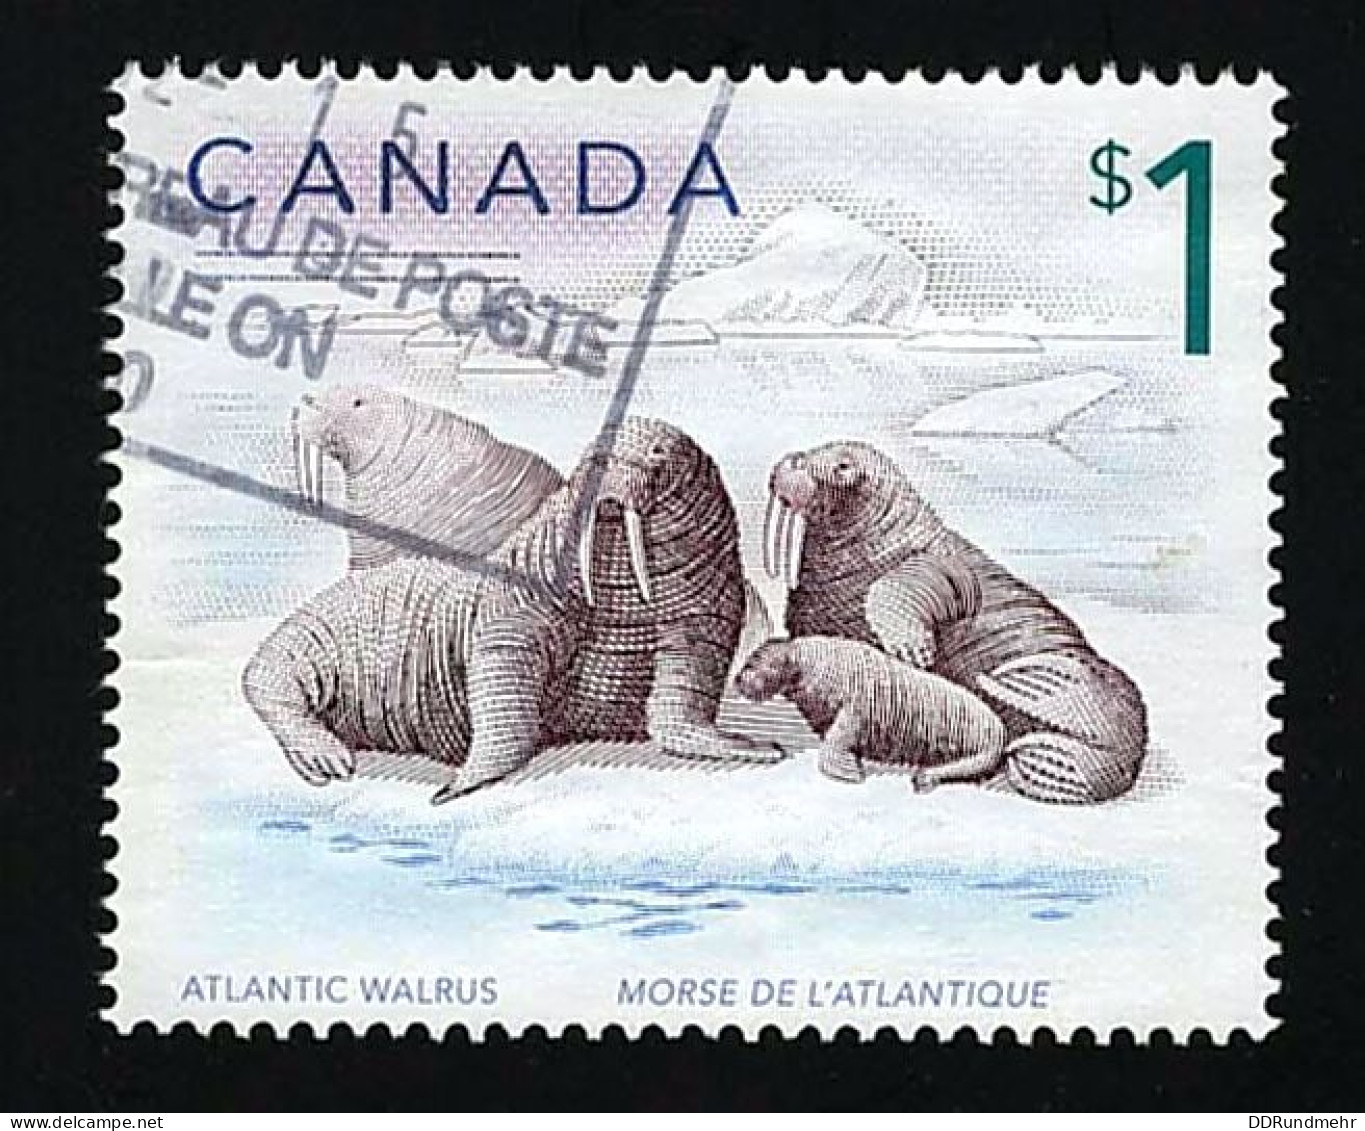 2005 Atlantic Walrus Michel CA 2300 Stamp Number CA 1689 Yvert Et Tellier CA 2183 Stanley Gibbons CA 1758 Used - Used Stamps